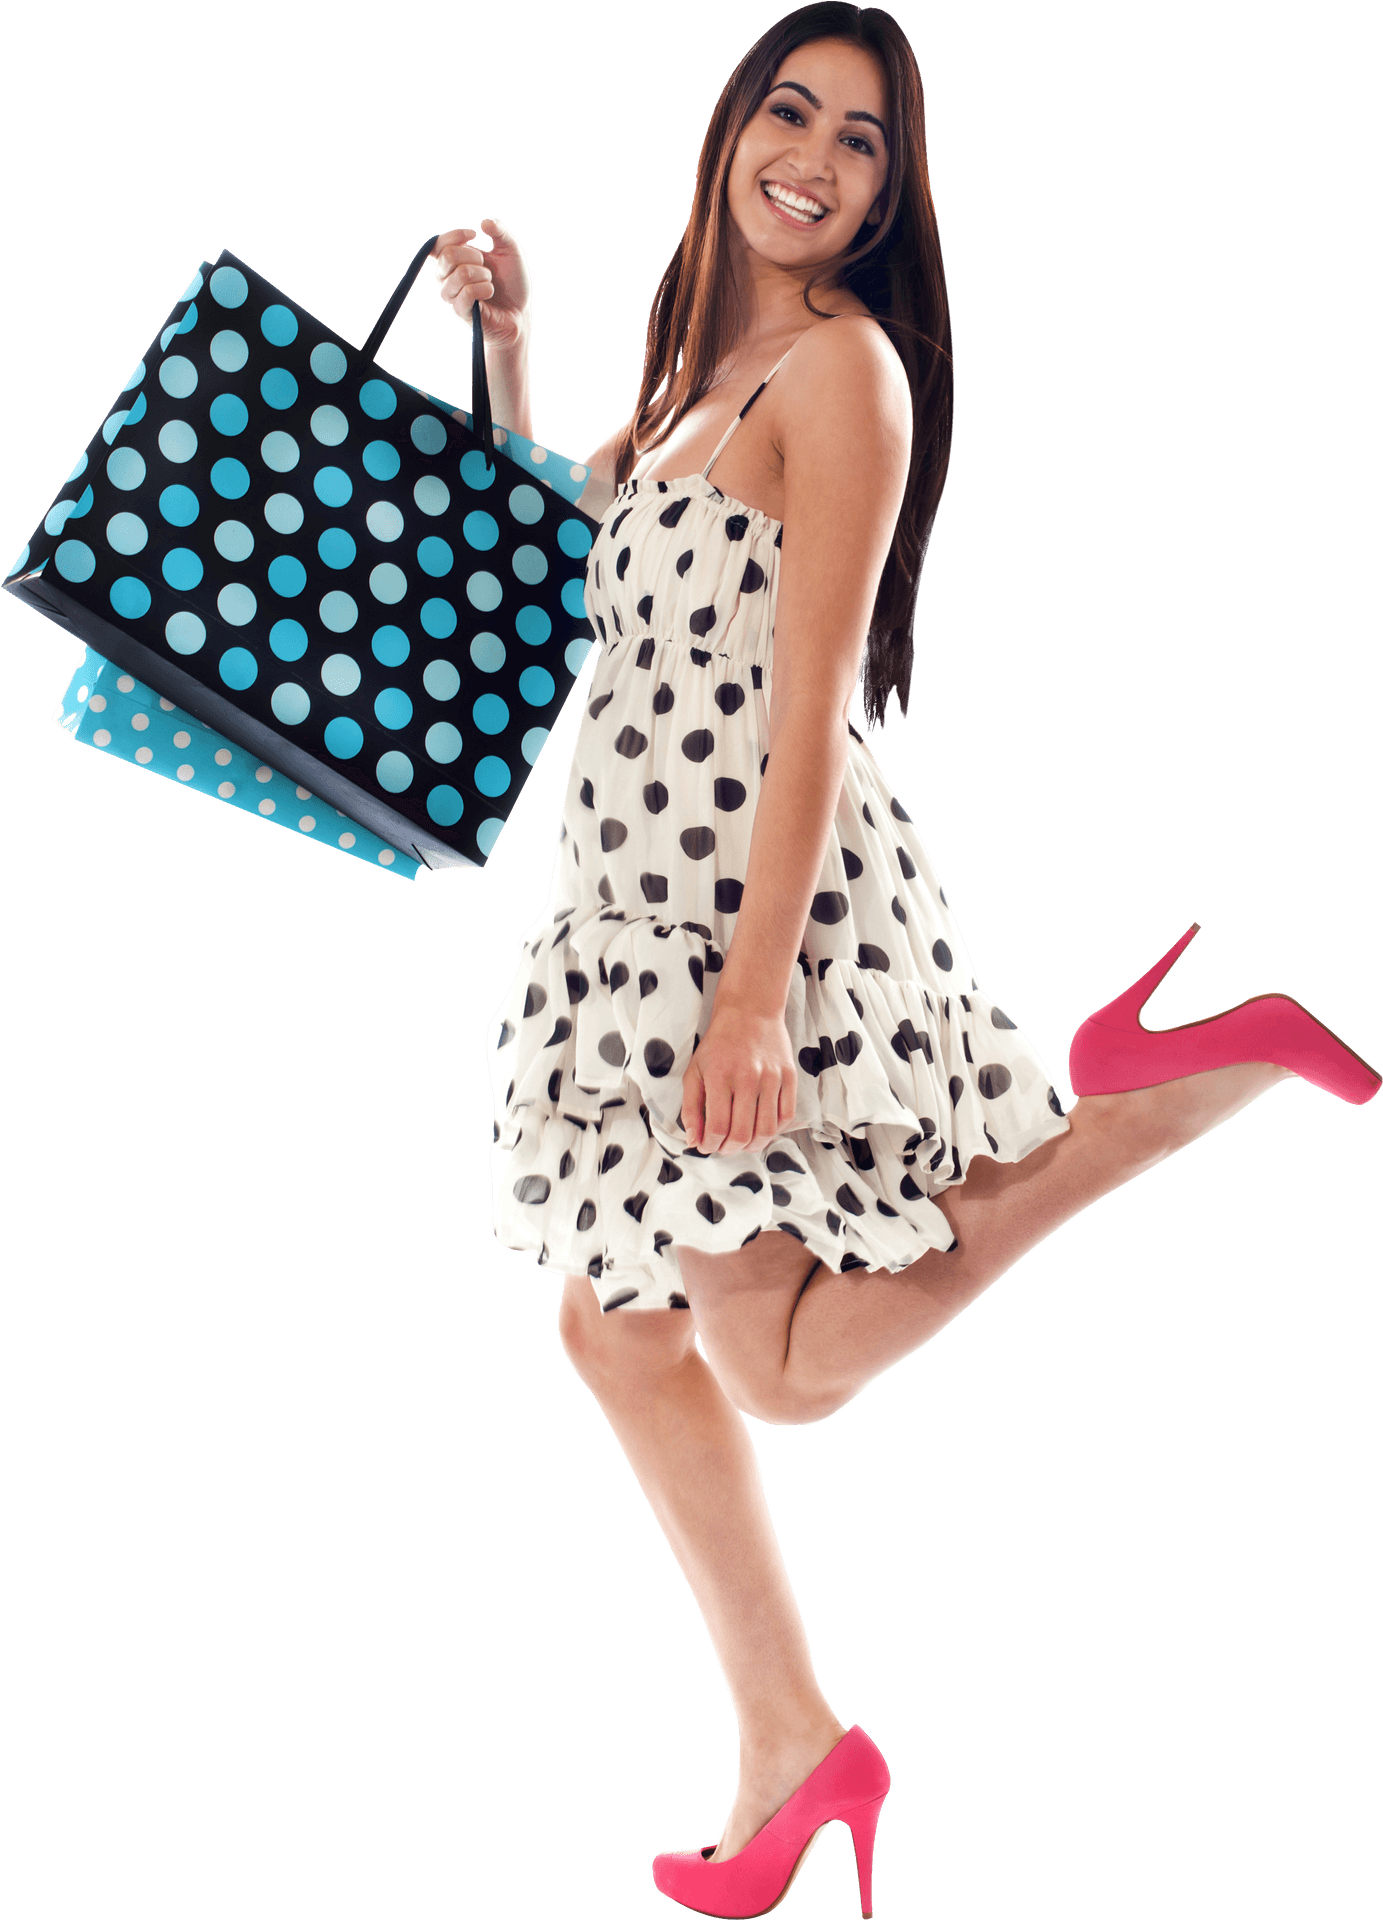 Polka Dot Dress Model With Colorful Bag PNG image